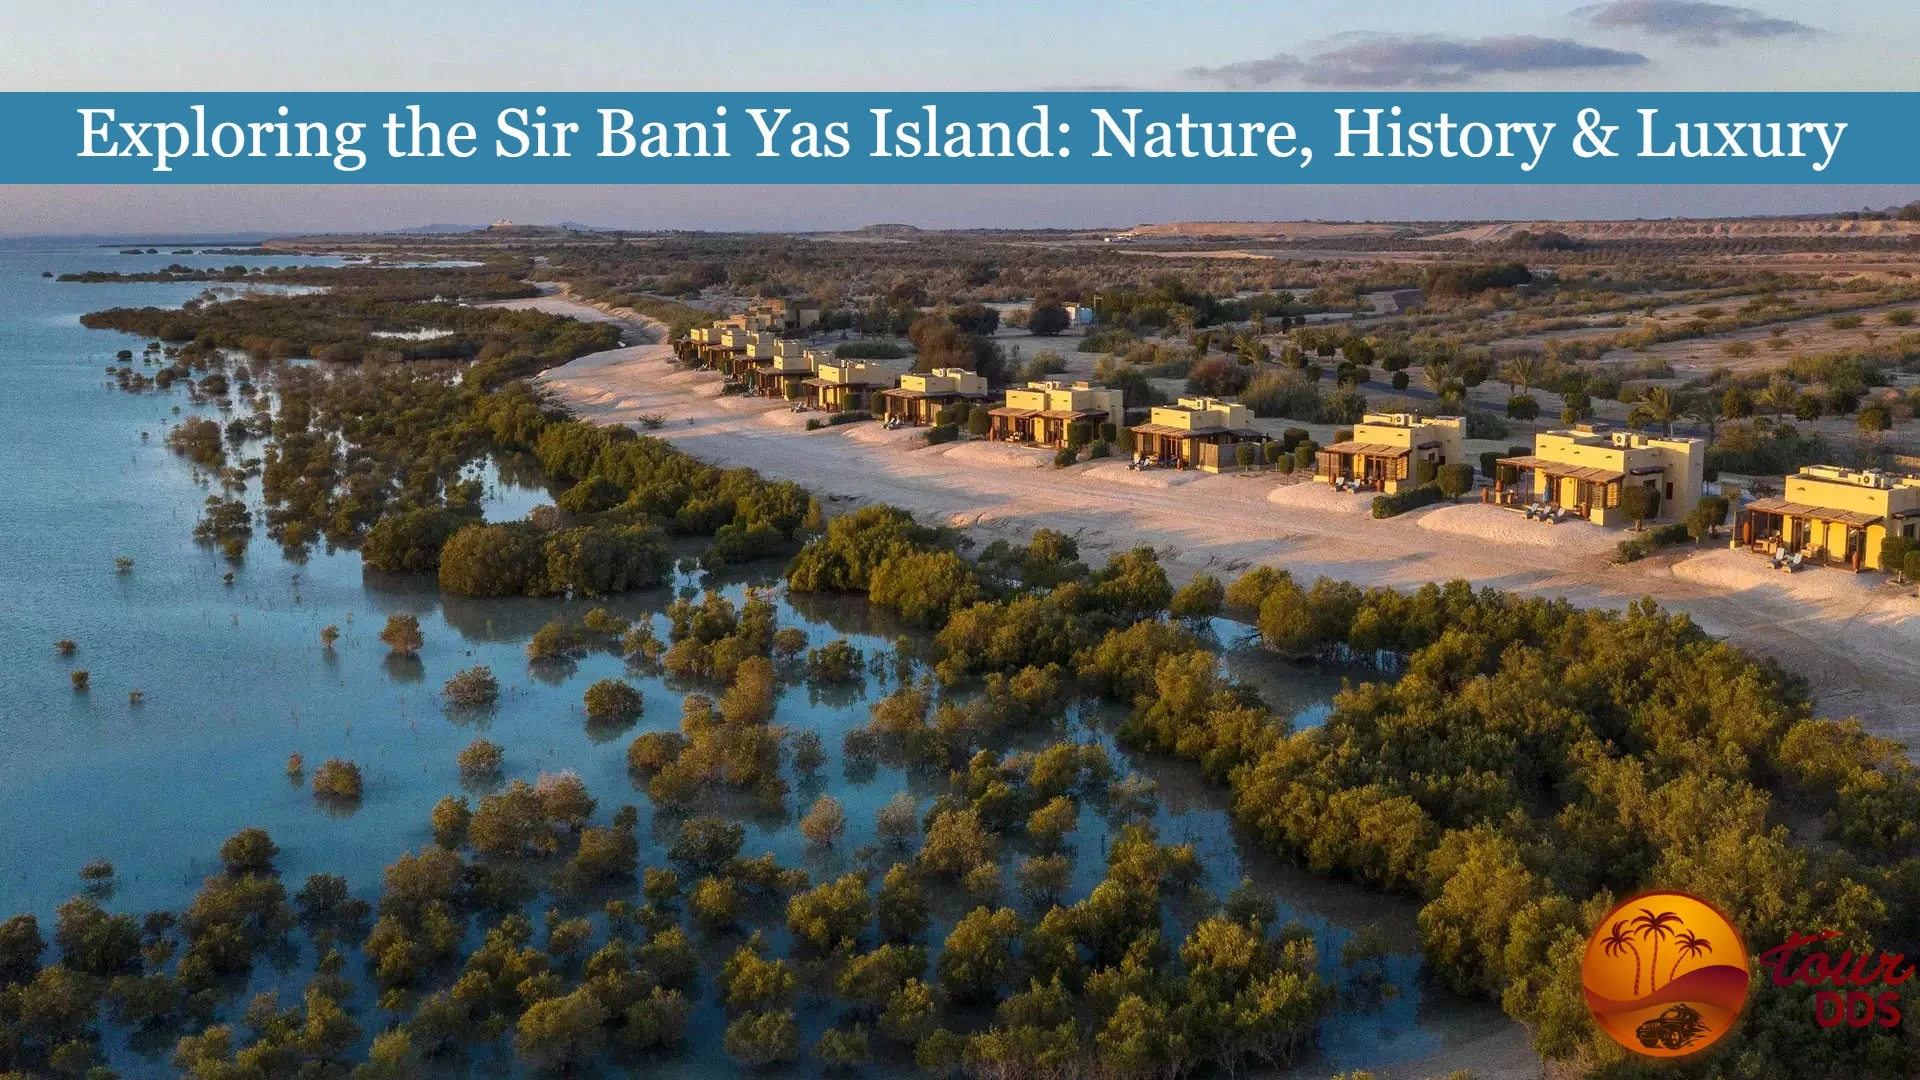 What makes Sir Bani Yas Island unique?